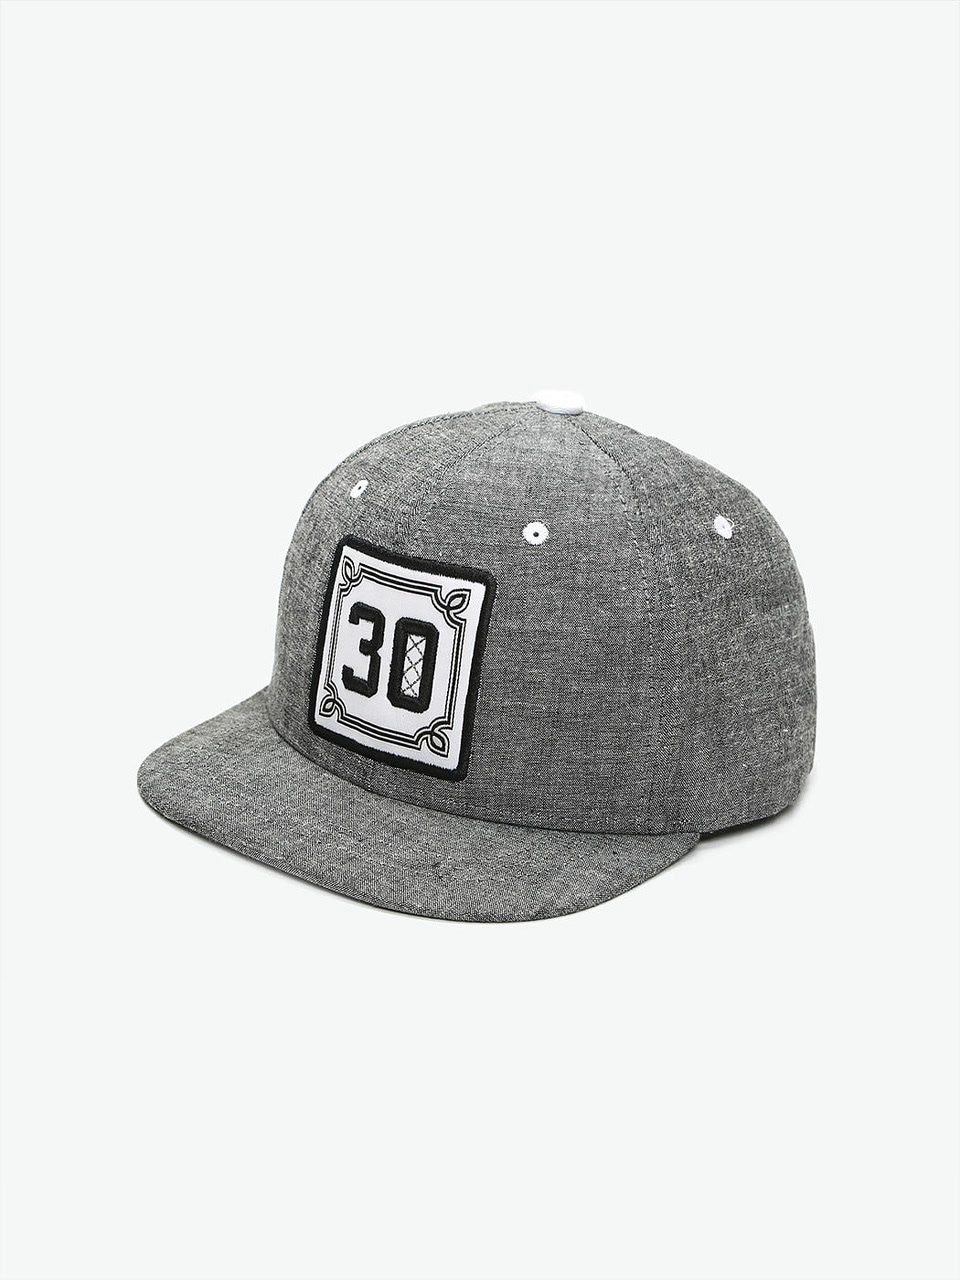 XXXTRENTA 30 (THIRTY) 鸭舌帽